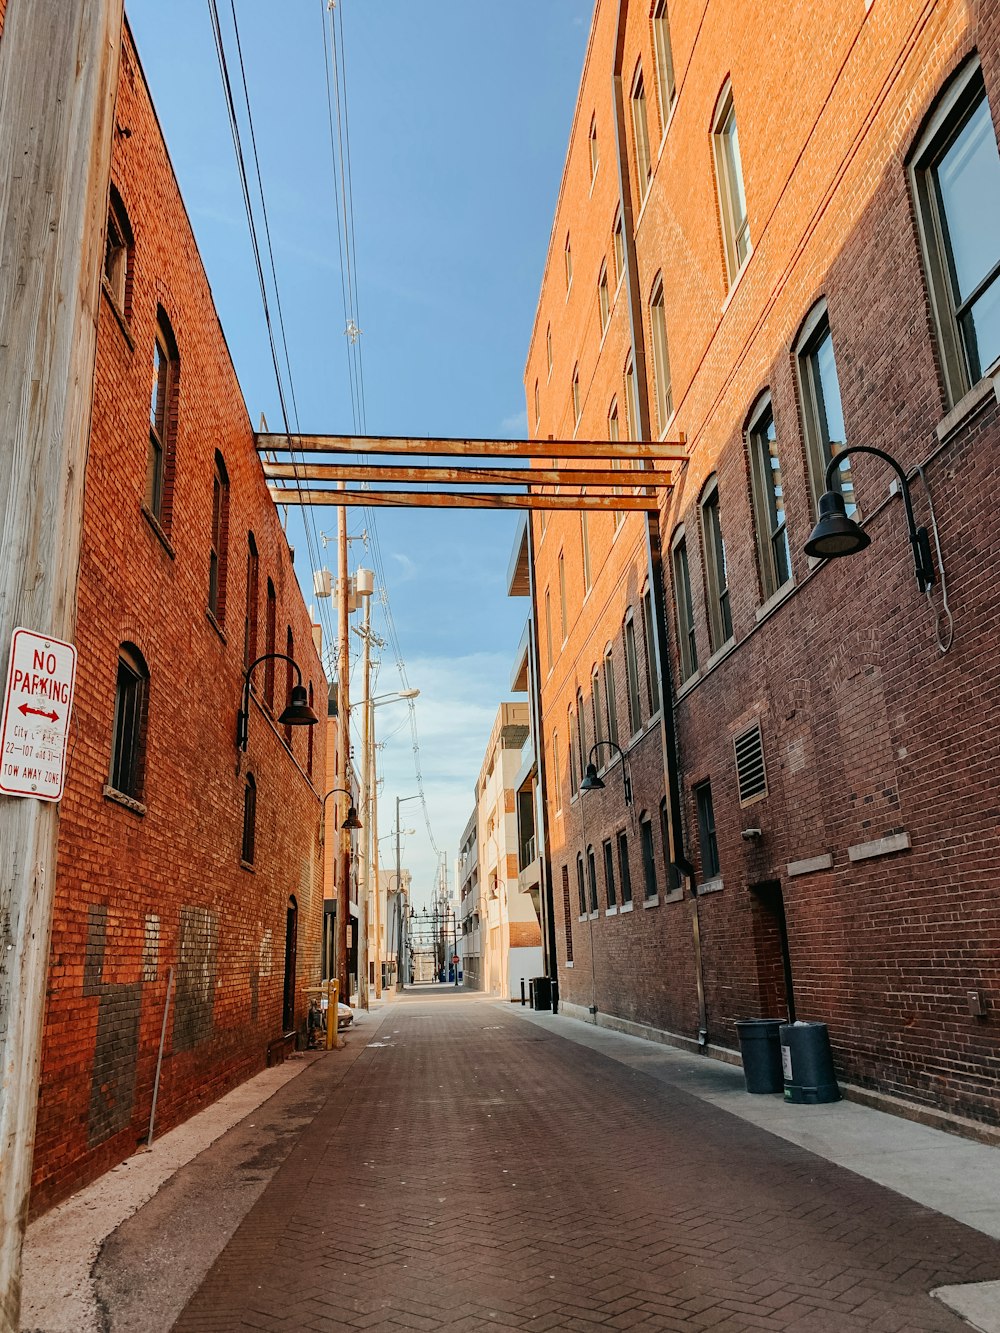 empty road between brown brick buildings during daytime